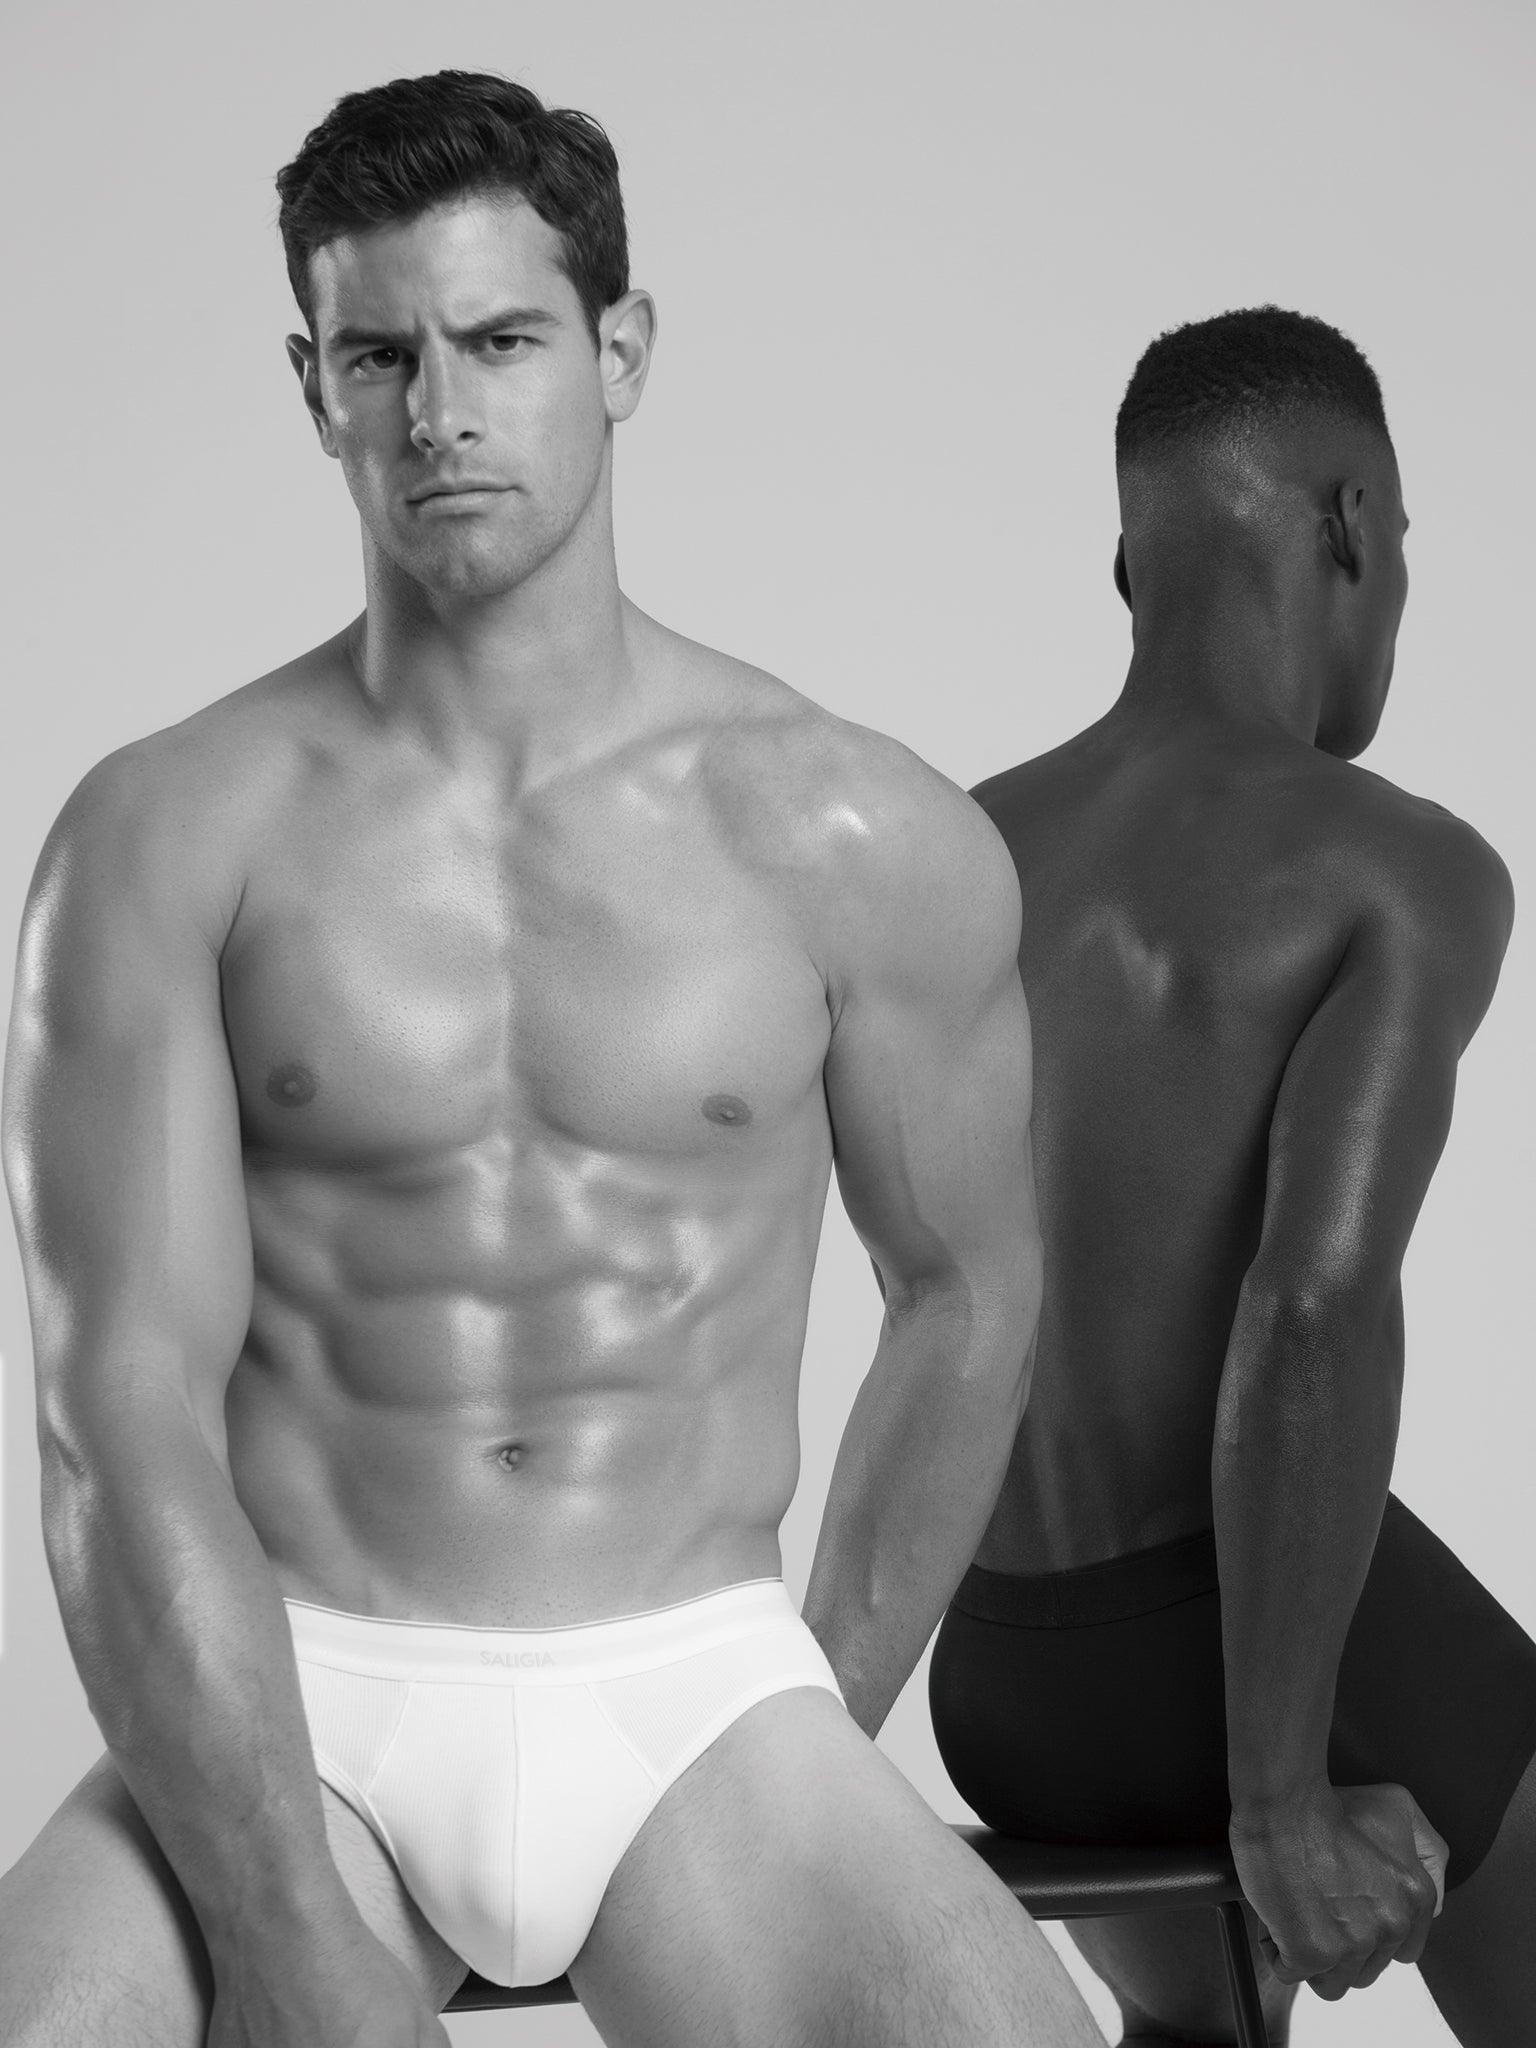 SALIGIA Men's Underwear & Clothes-Contemporary Style, Designed To Last